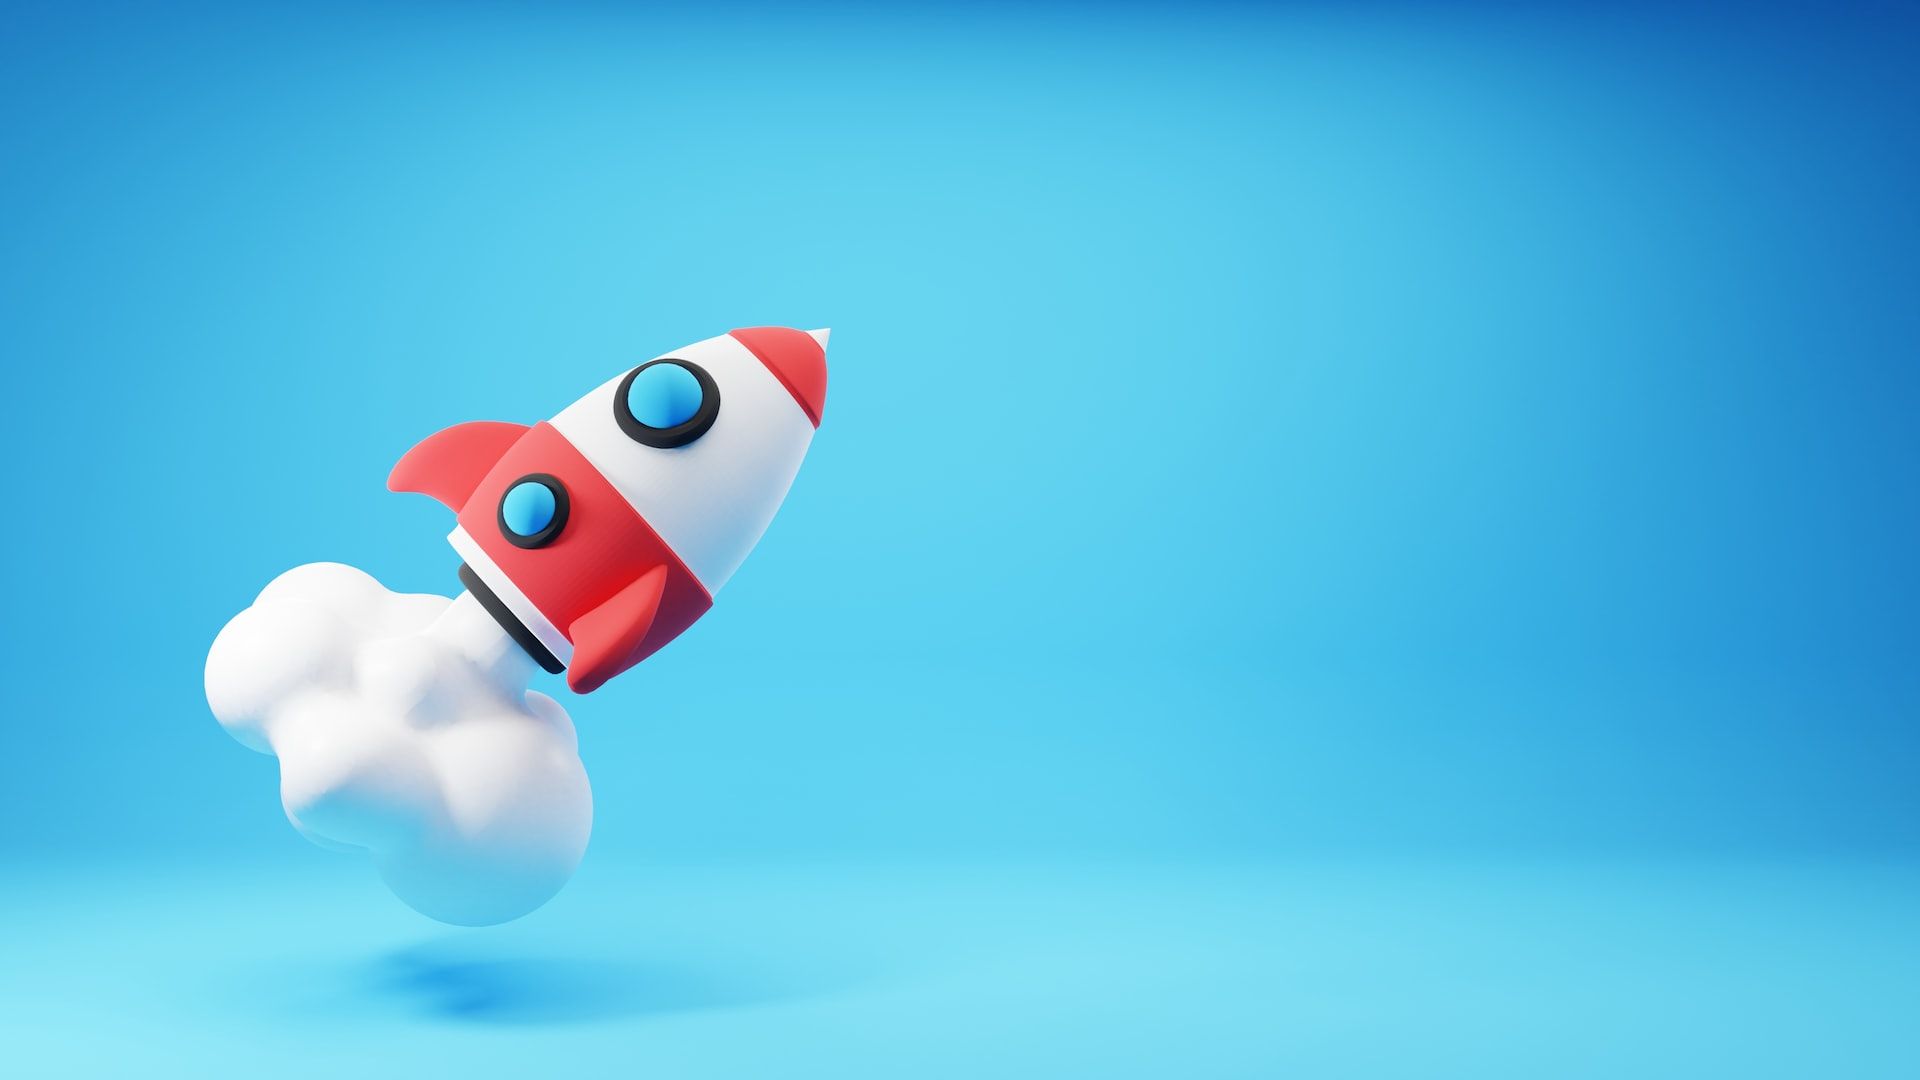 3D rocket on a blue background